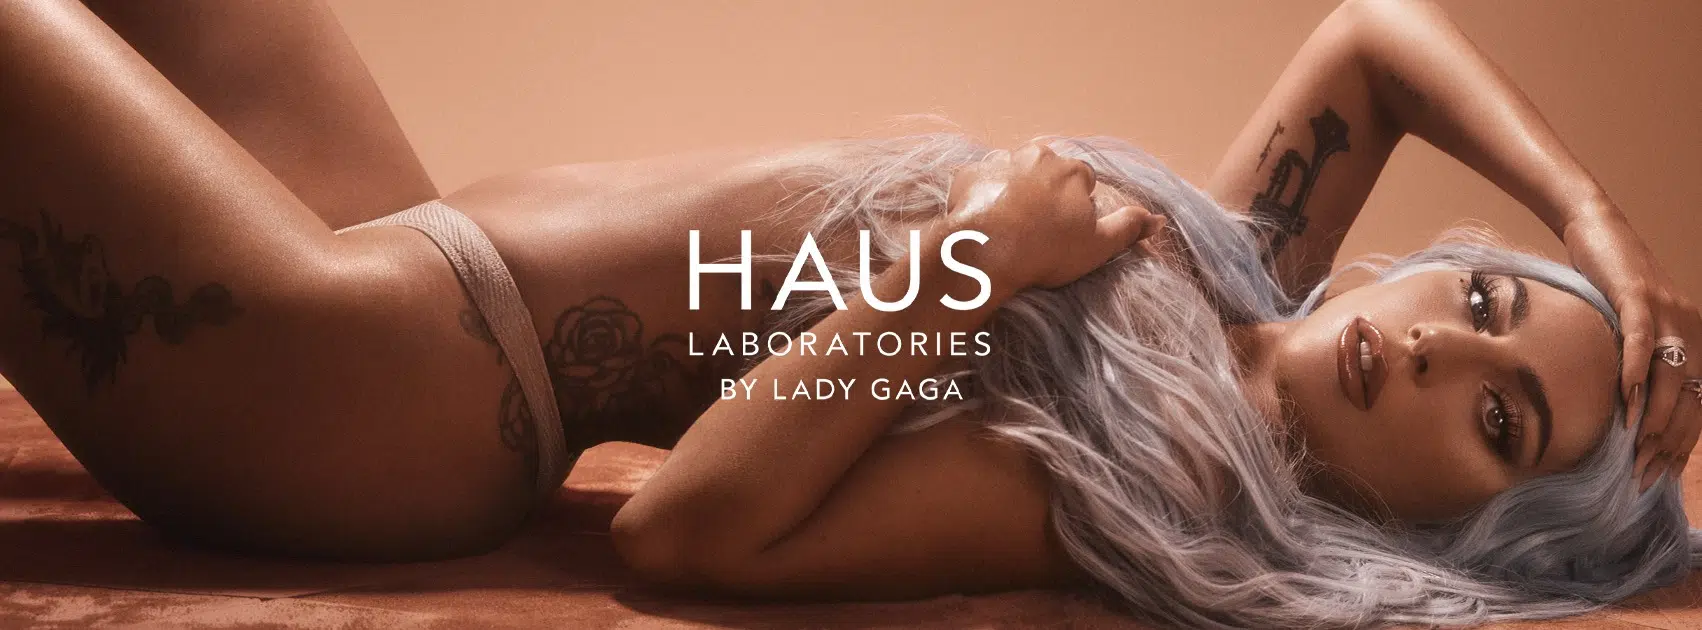 Lady Gaga Sets New Milestone